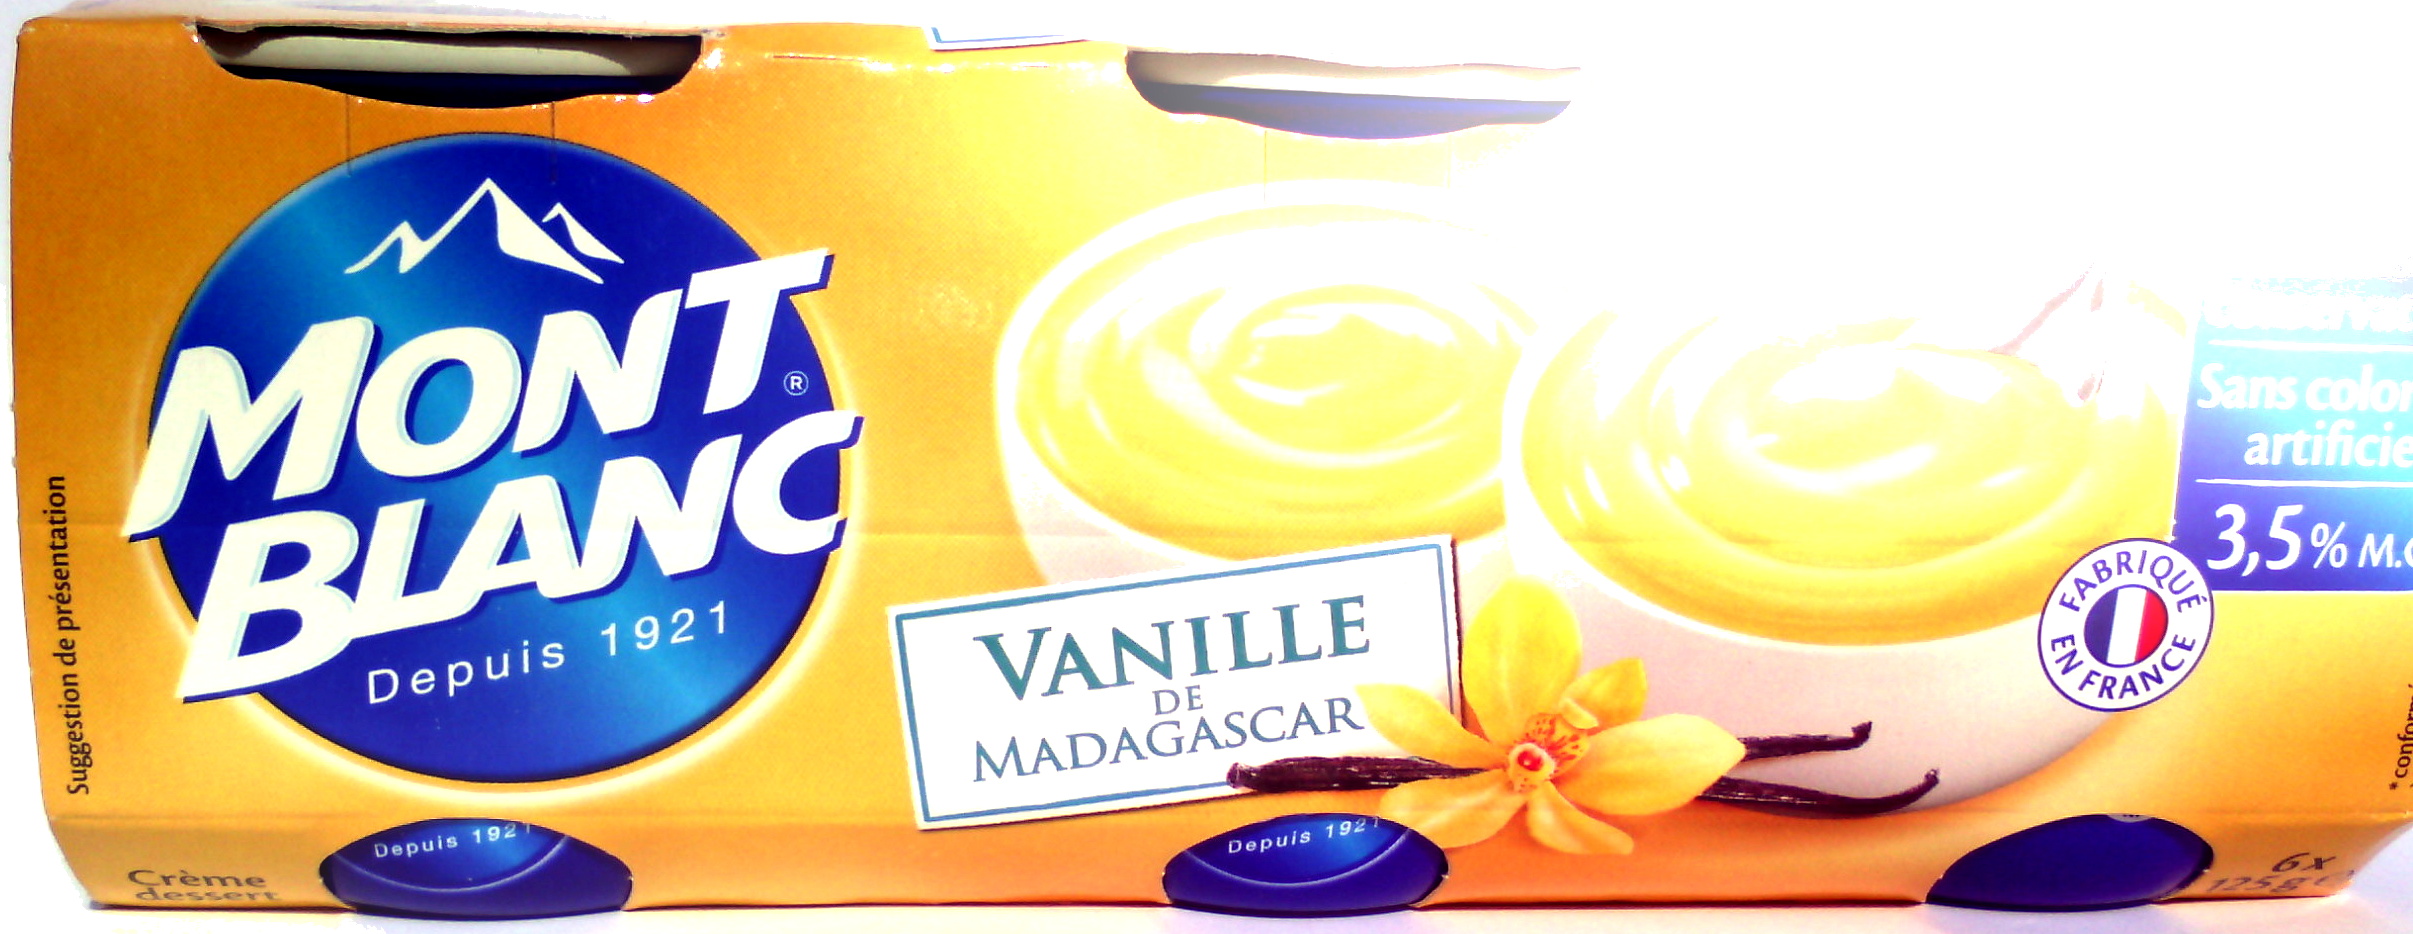 Vanille de Madagascar (3,5 % MG) - Product - fr